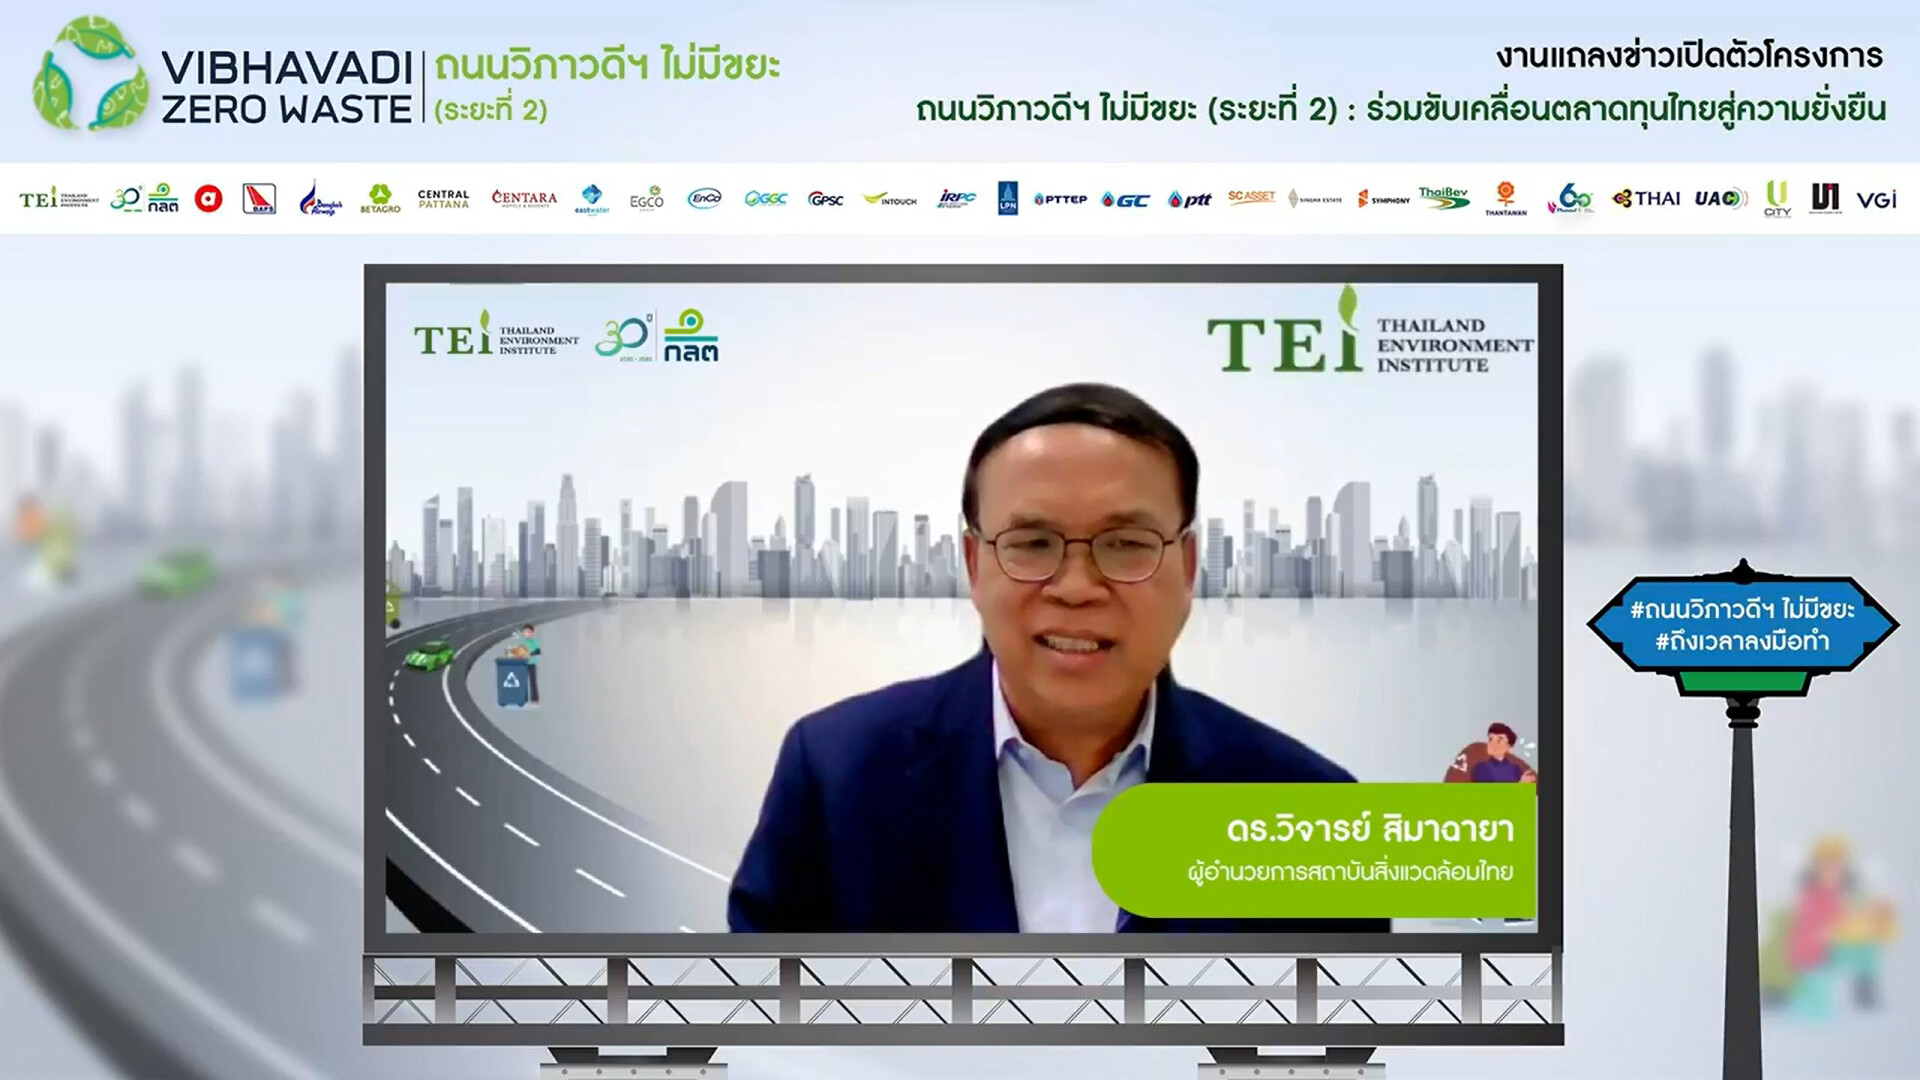 TEI ผนึกกำลัง ก.ล.ต. พร้อมด้วย 28 องค์กรพันธมิตร เปิดตัวโครงการ "ถนนวิภาวดีฯ ไม่มีขยะ (ระยะที่ 2) : ร่วมขับเคลื่อนตลาดทุนไทยสู่ความยั่งยืน"  สานต่อการบริหารจัดการขยะภายในองค์กร